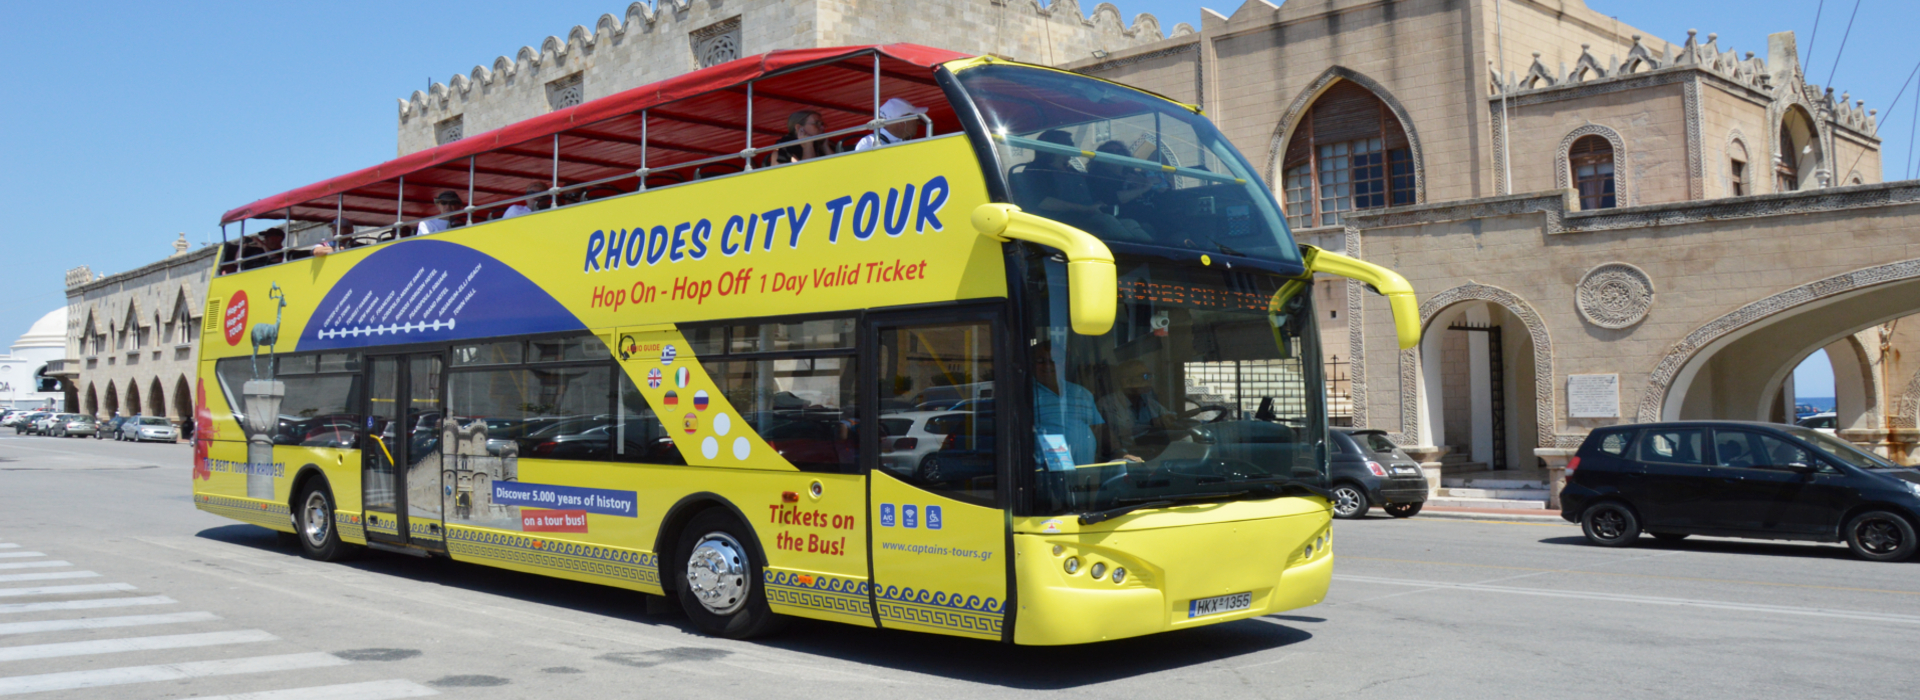 Rhodes City Tour with OpenBus by Captains Tours